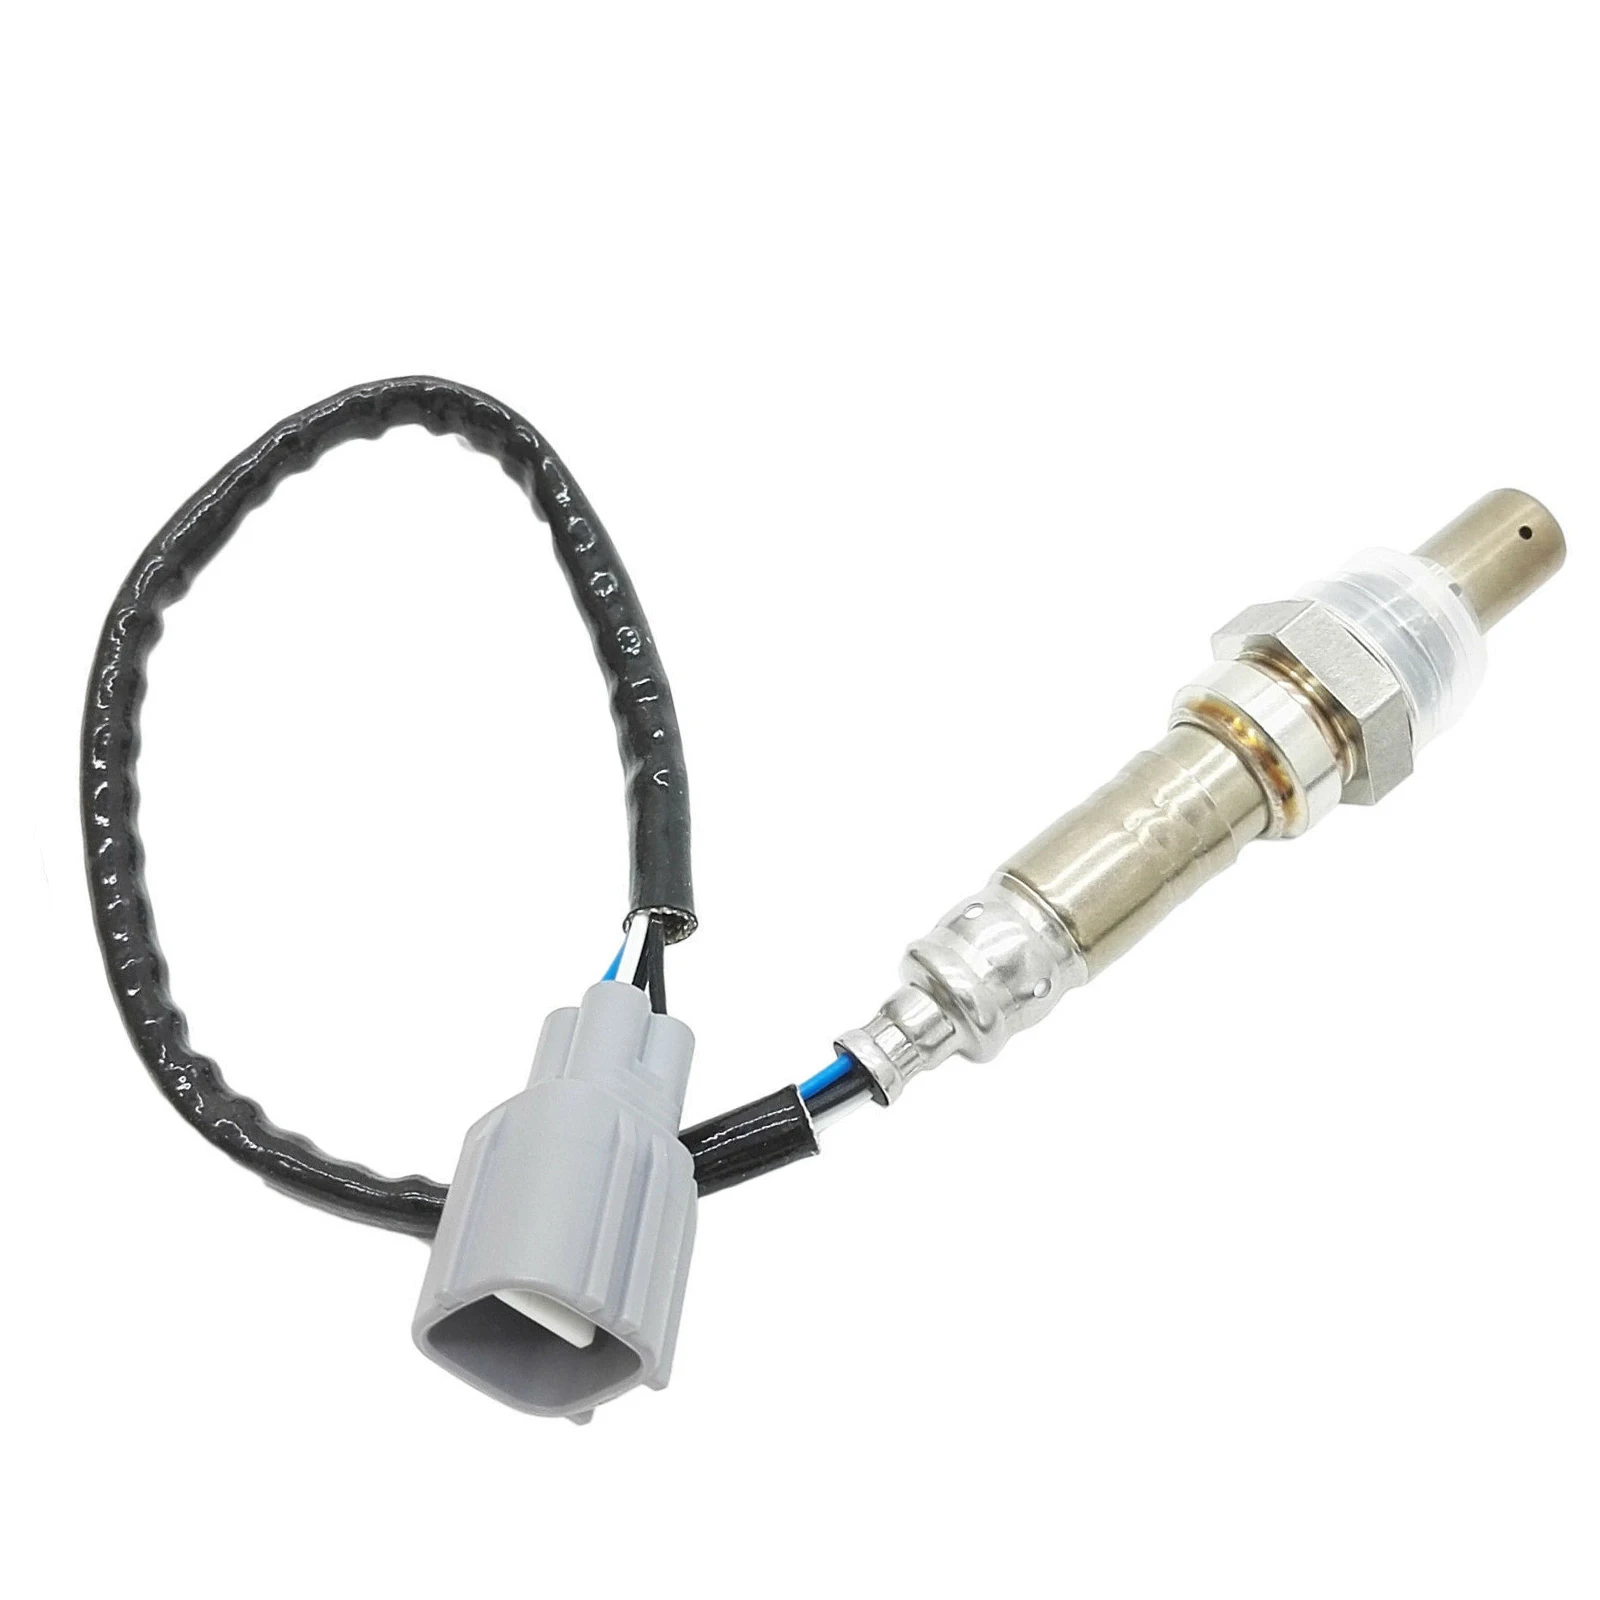 Air Fuel Ratio Oxygen Sensor Upstream O2 Sensor Fits for Toyota for Lexus 234-9009 89467-41011 Replacement Acc